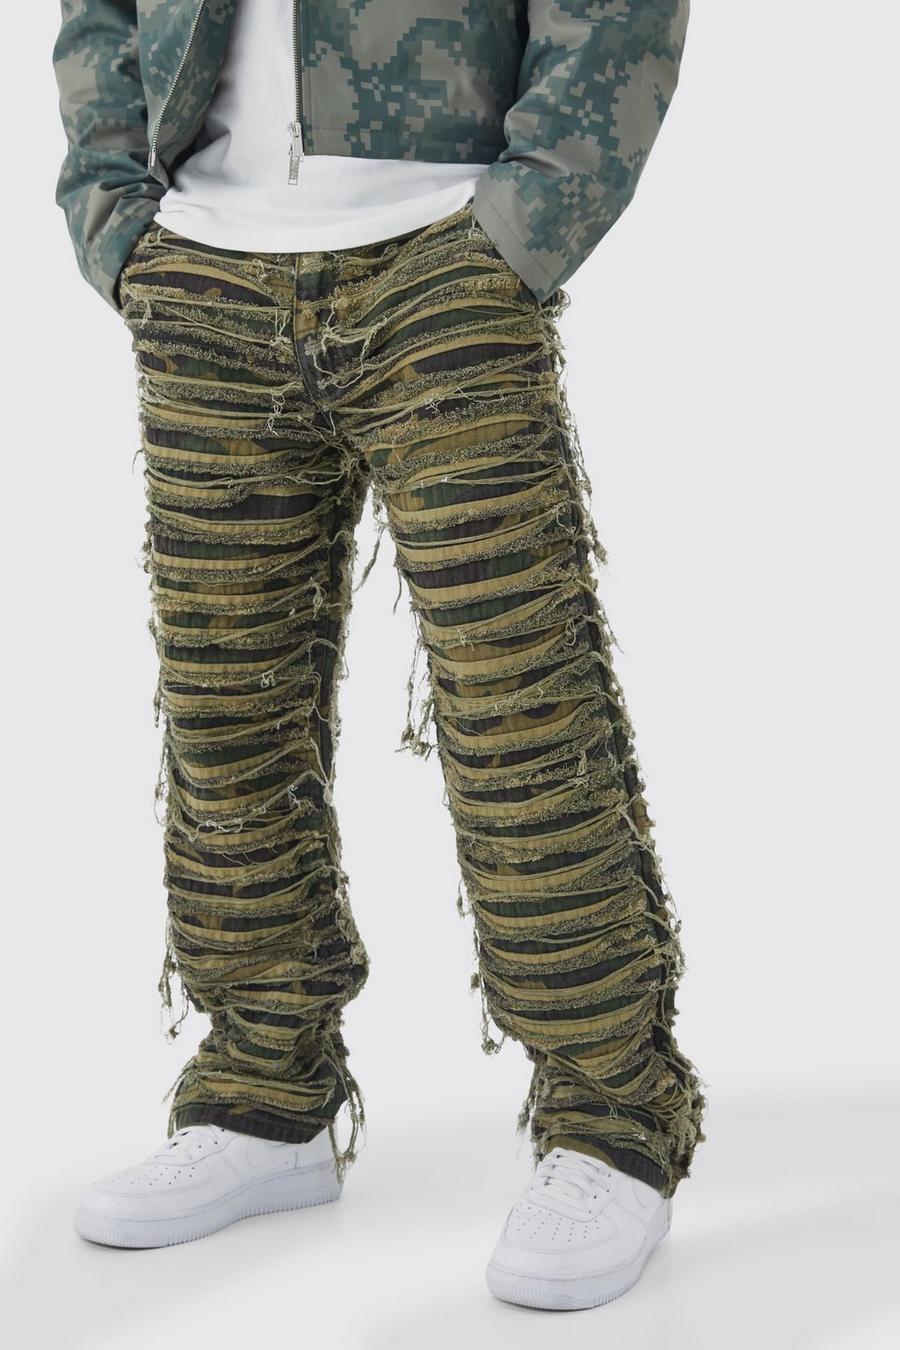 Avia, Pants & Jumpsuits, Avia Yoga Pants 2 Xxl Black Camo Camouflage  Workout Gear Sport Pants Leggings